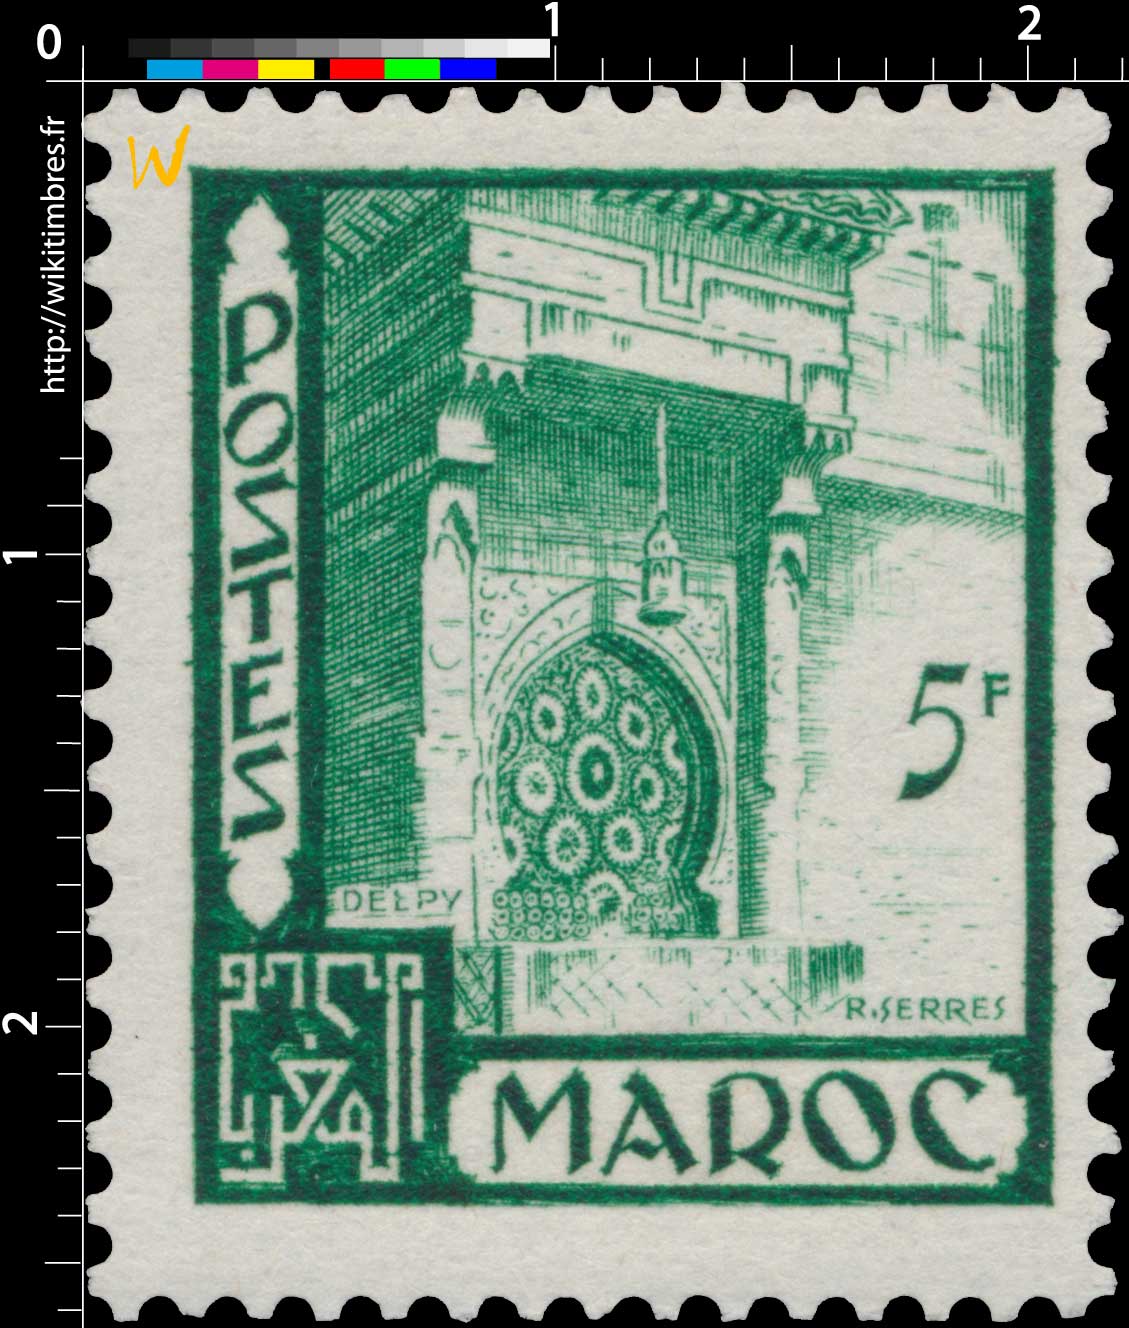 1949 Maroc - Fontaine Nedjarine - Fès